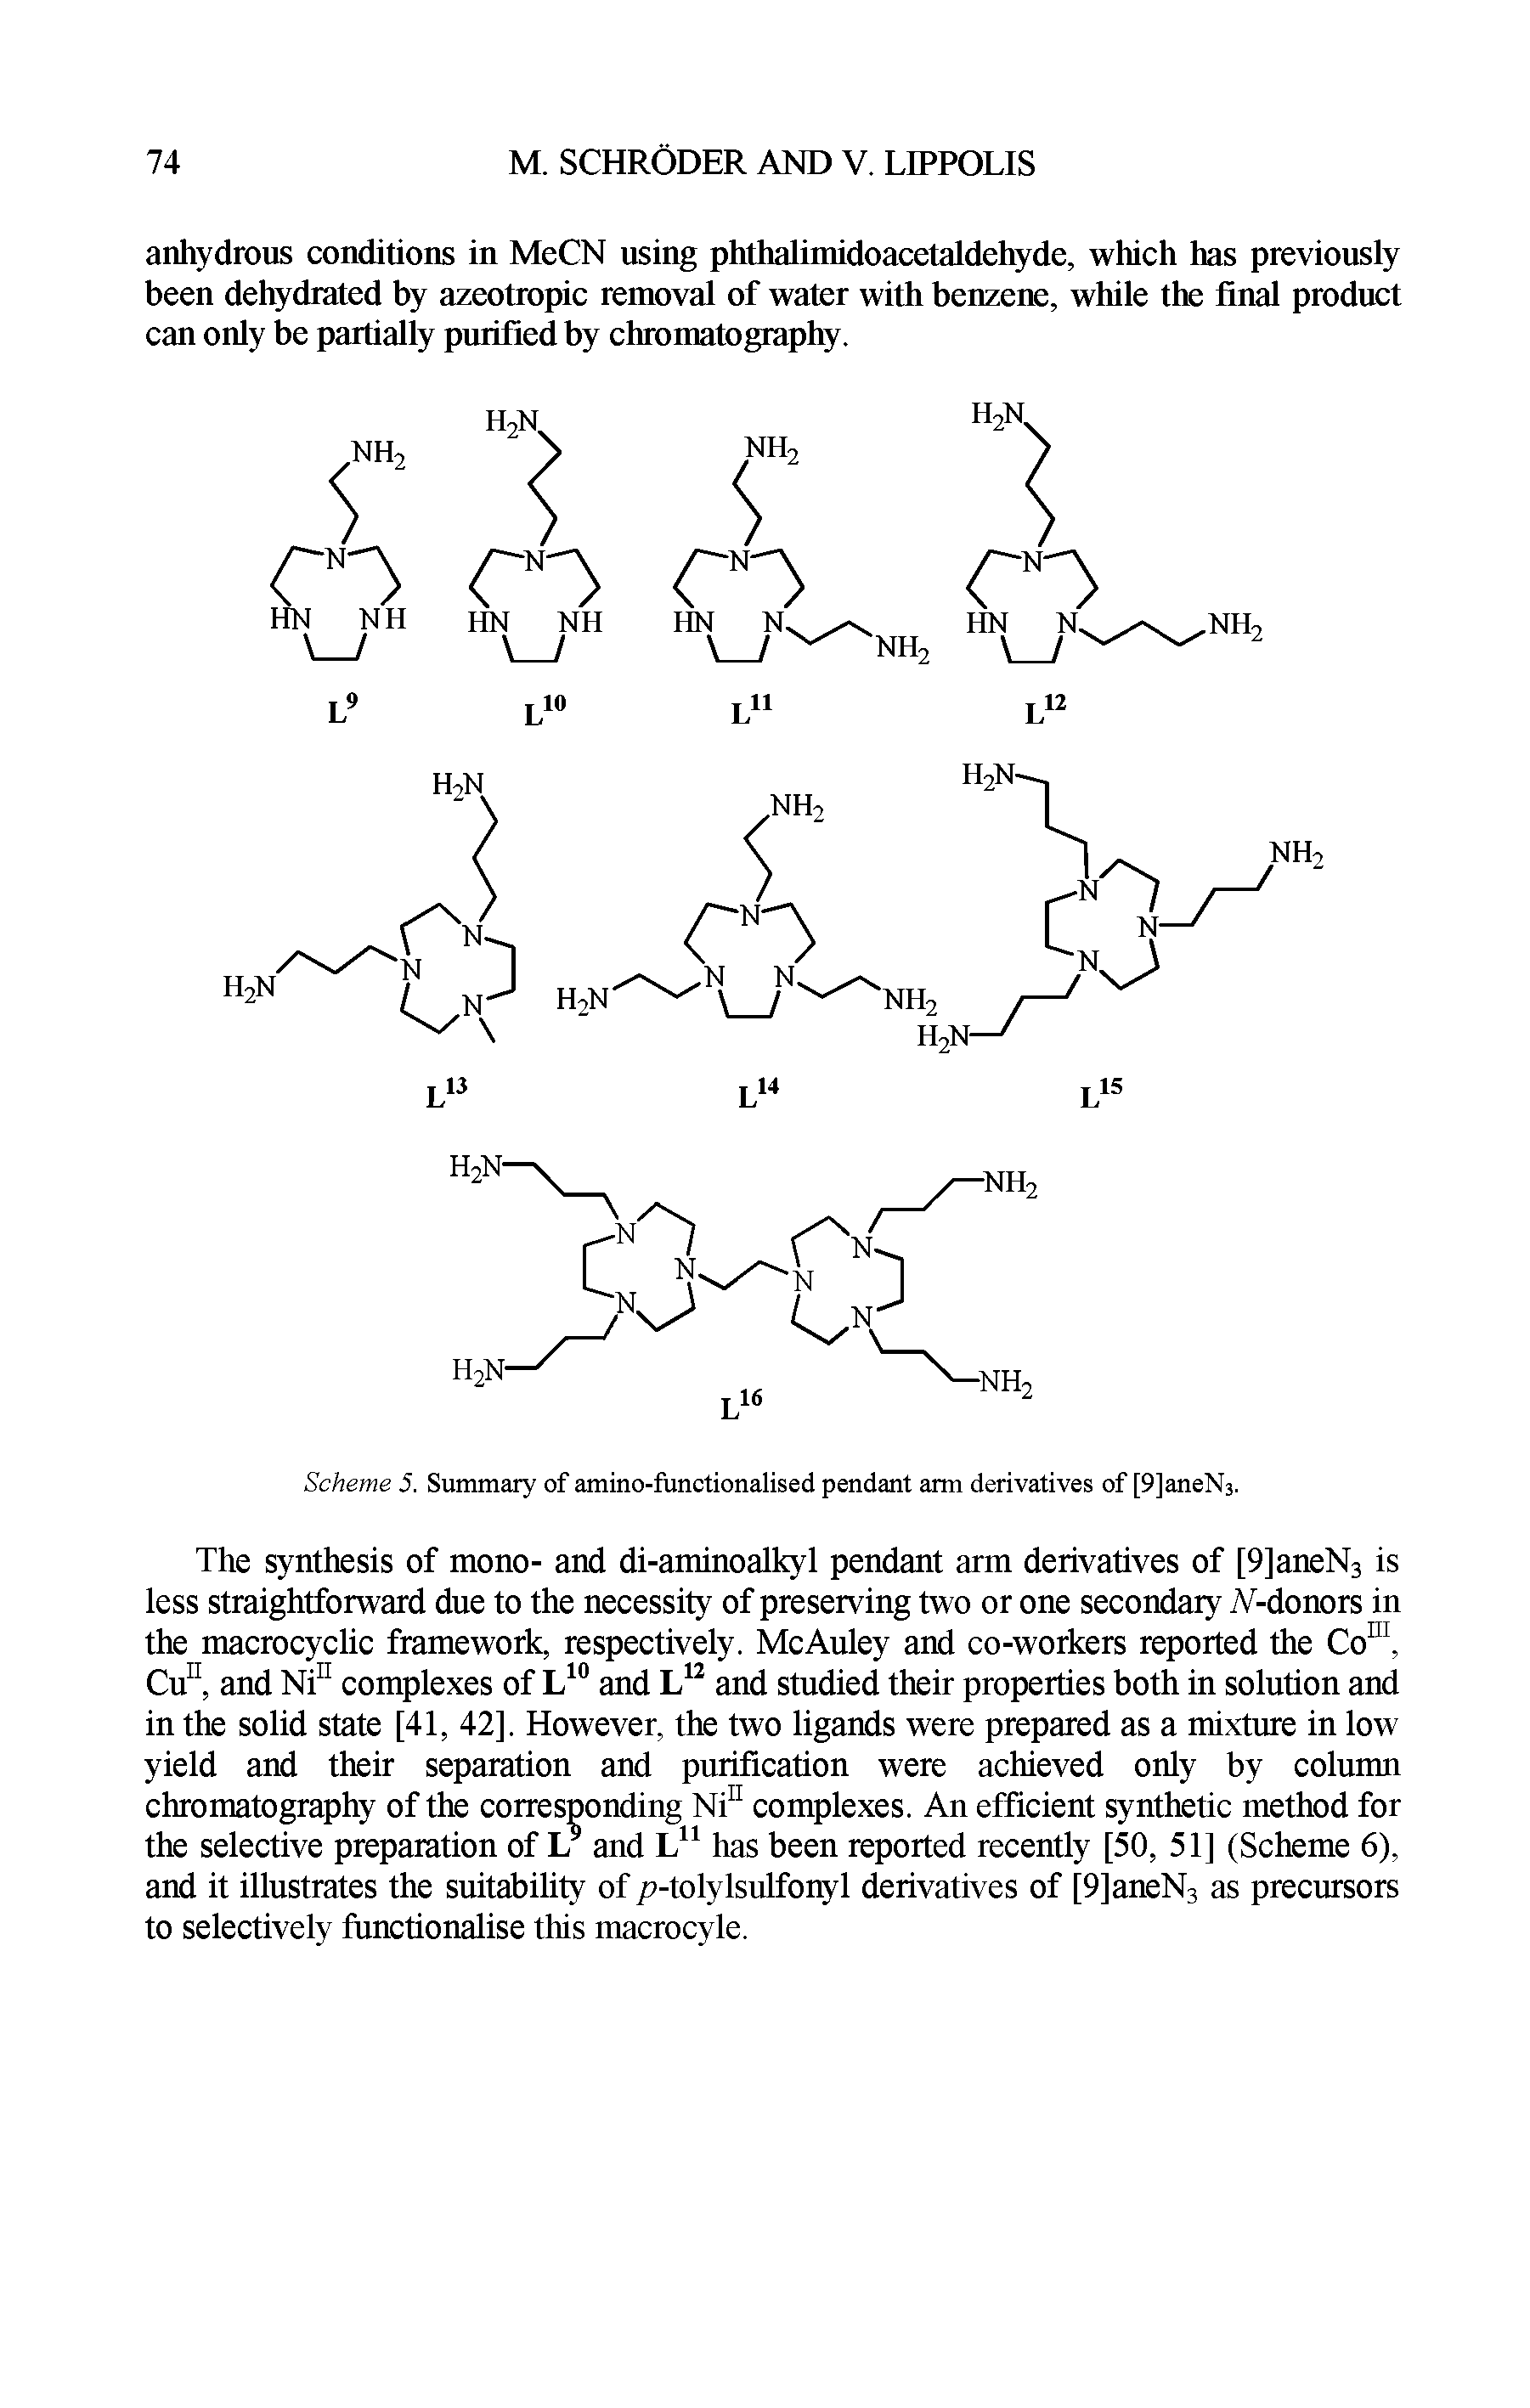 Scheme 5. Summary of amino-functionalised pendant arm derivatives of [9]aneN3.